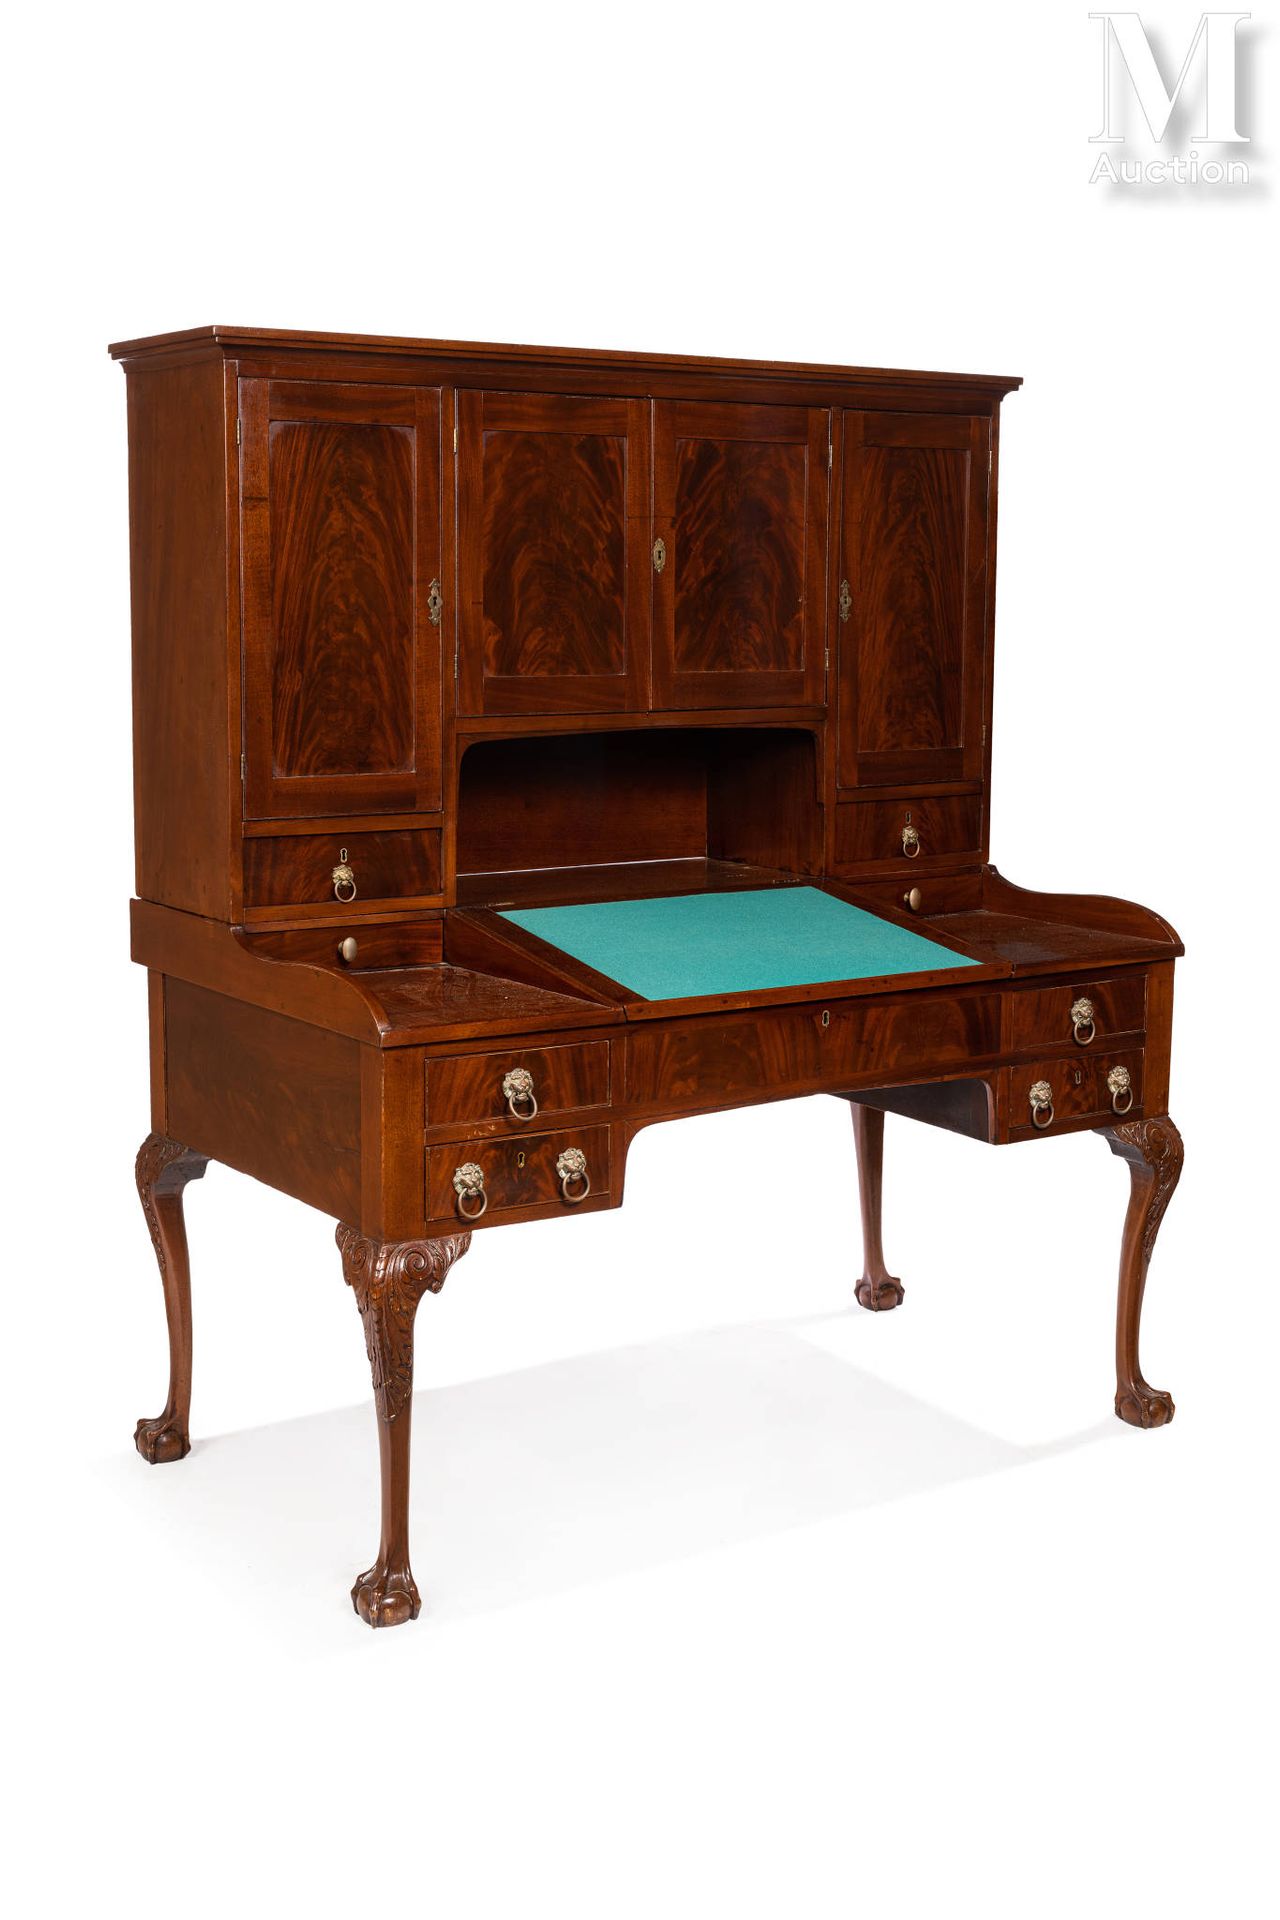 Imposant bureau à gradin in mahogany and mahogany veneer, rectangular in shape, &hellip;